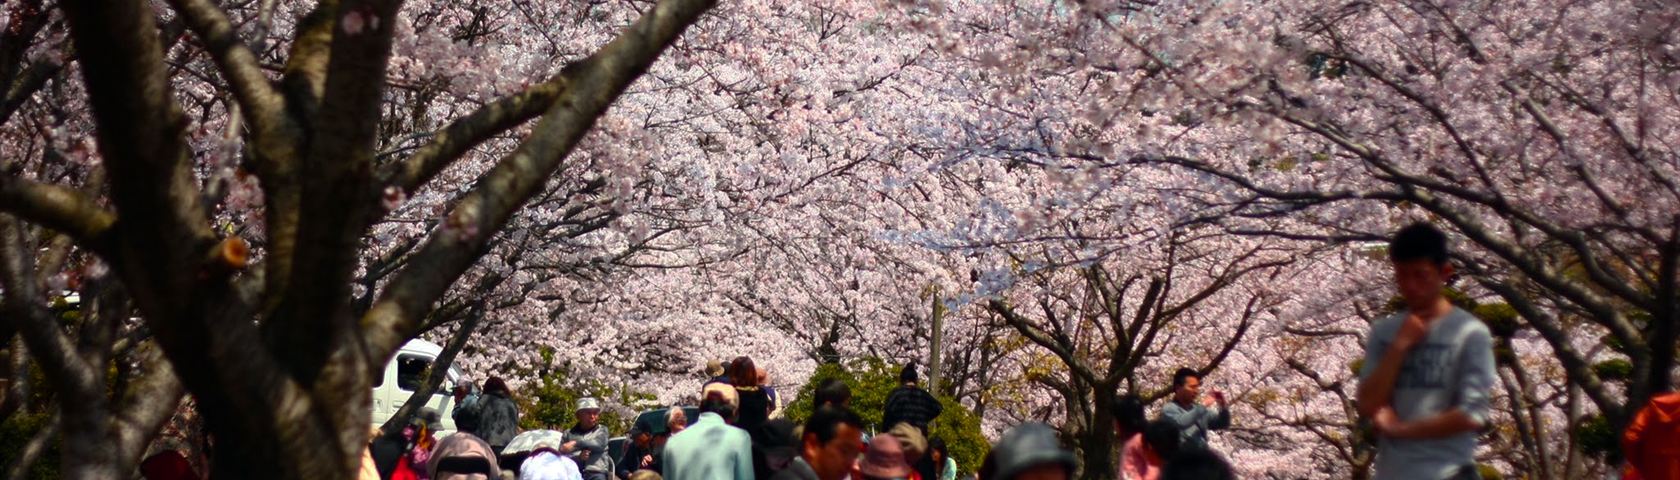 Walkway Beneath Flowering Cherry Trees